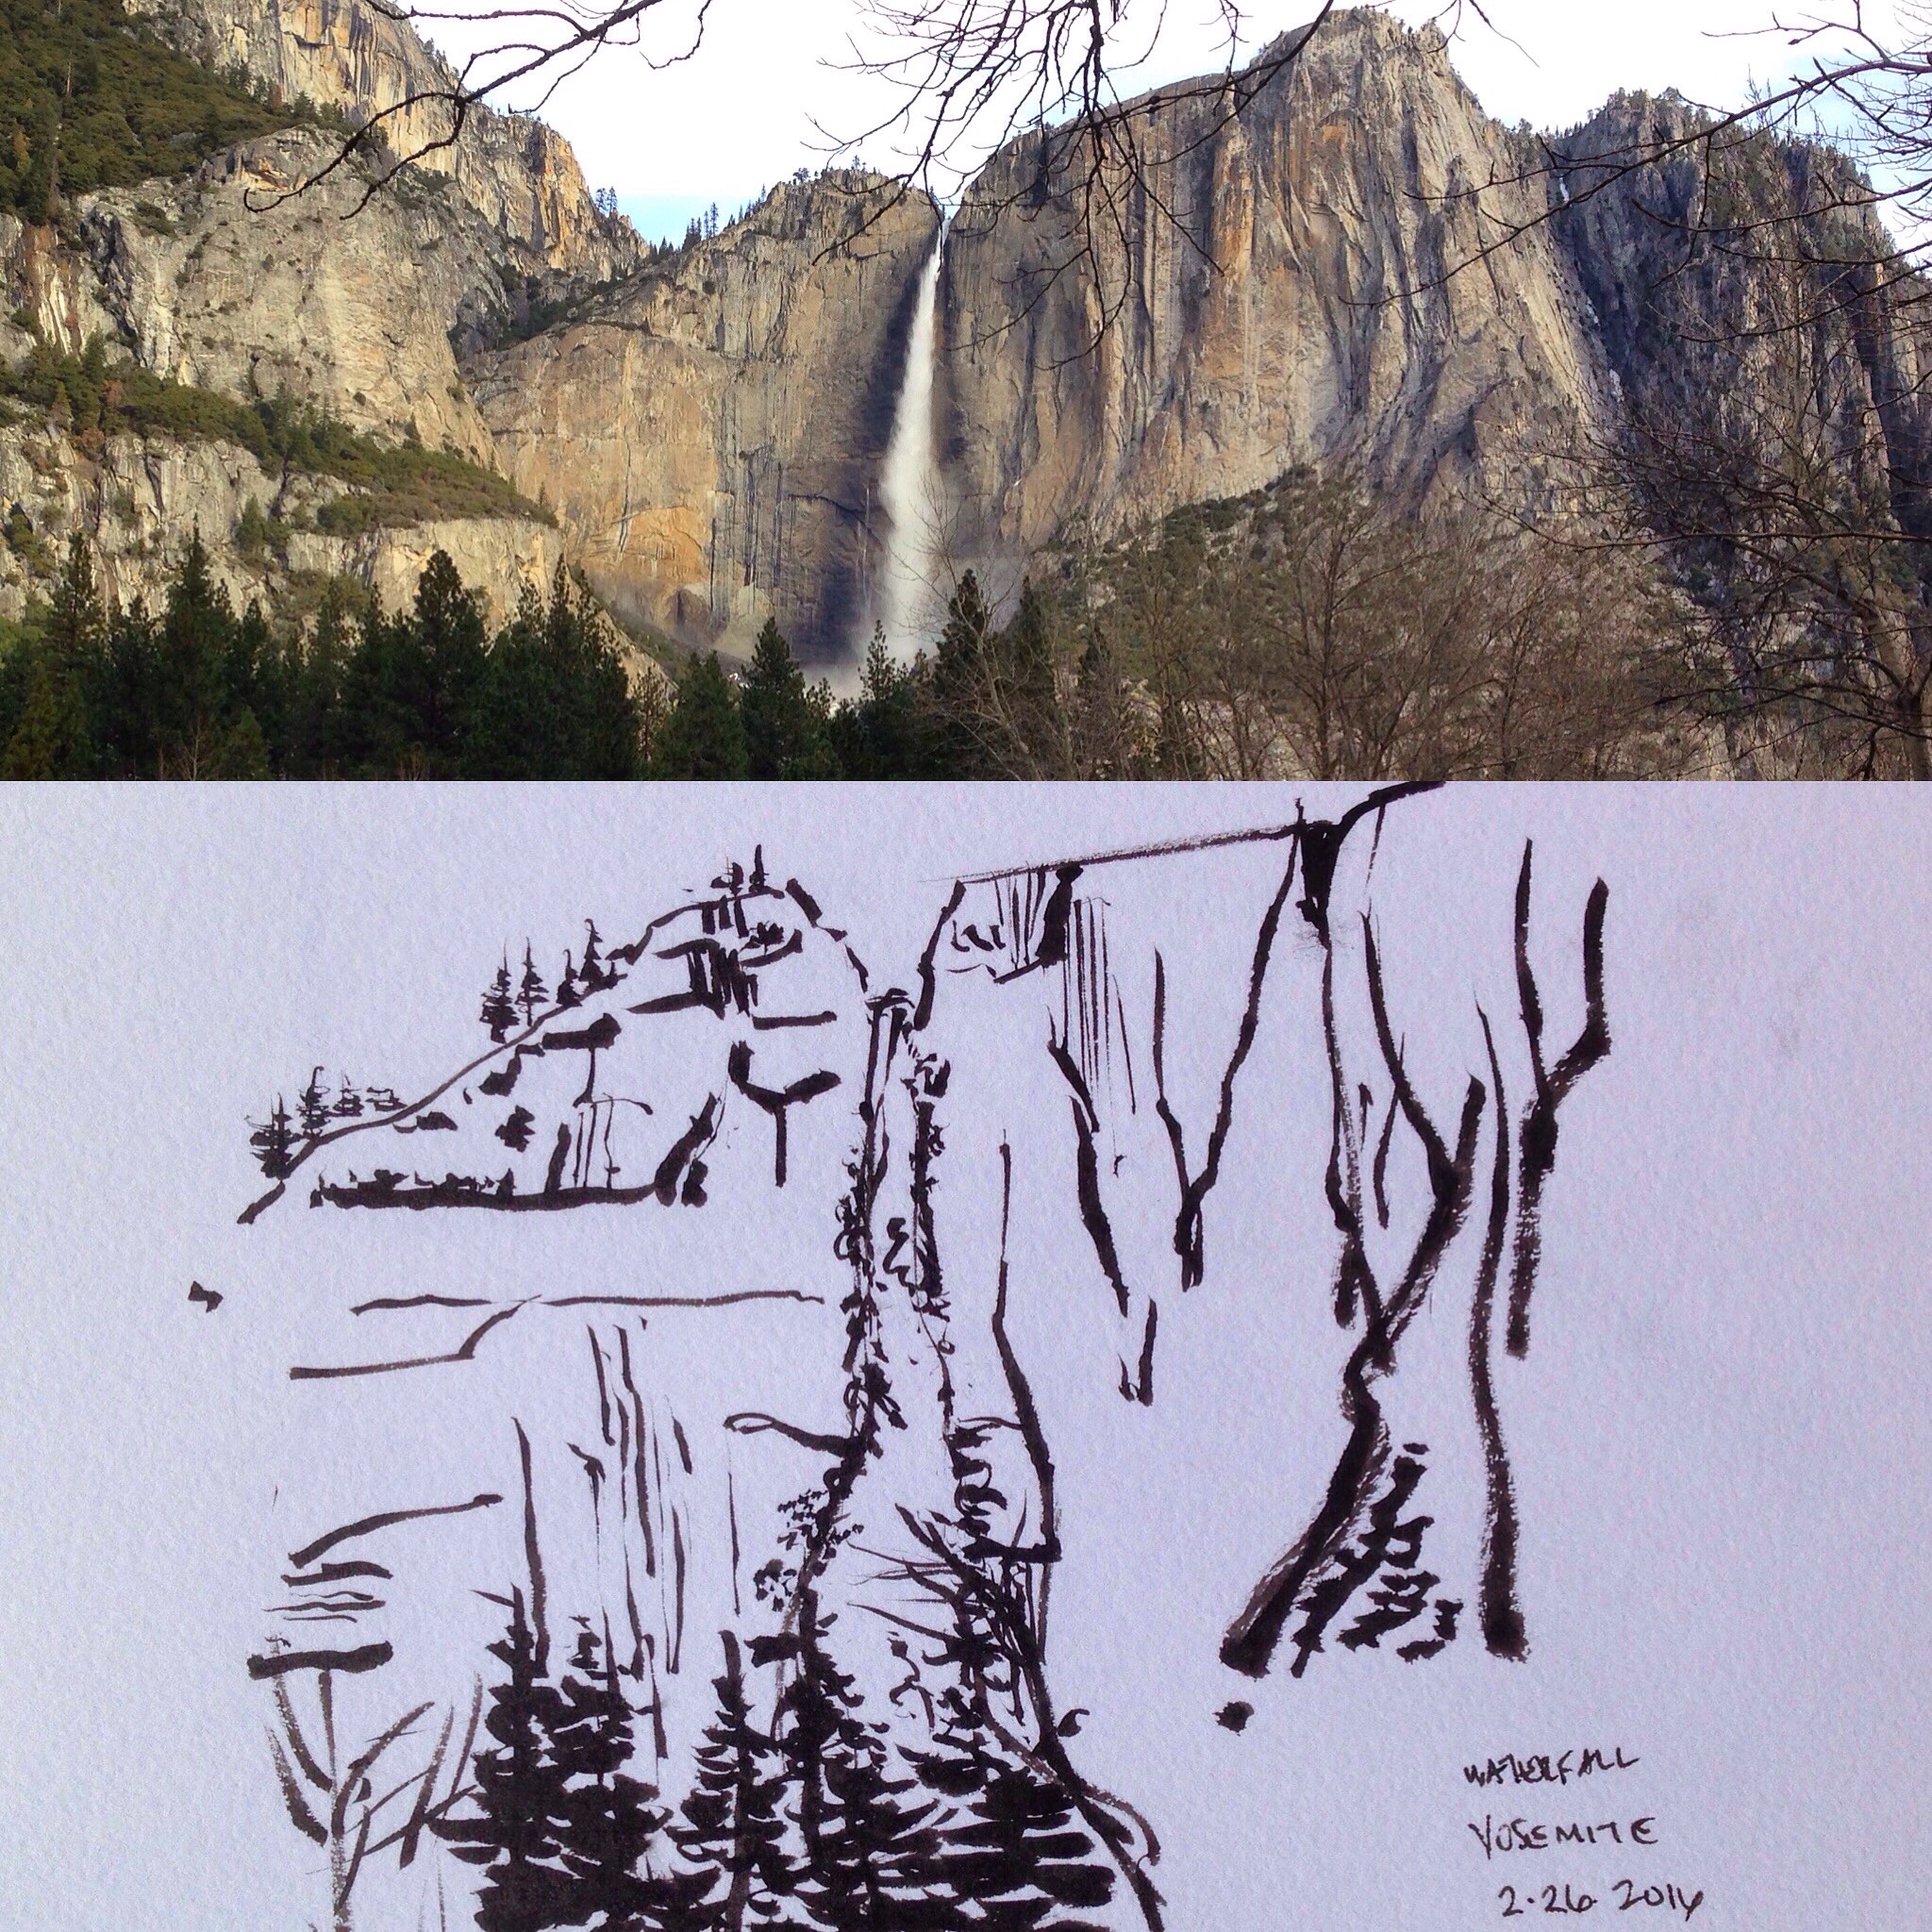 Yosemite, Feb 2016